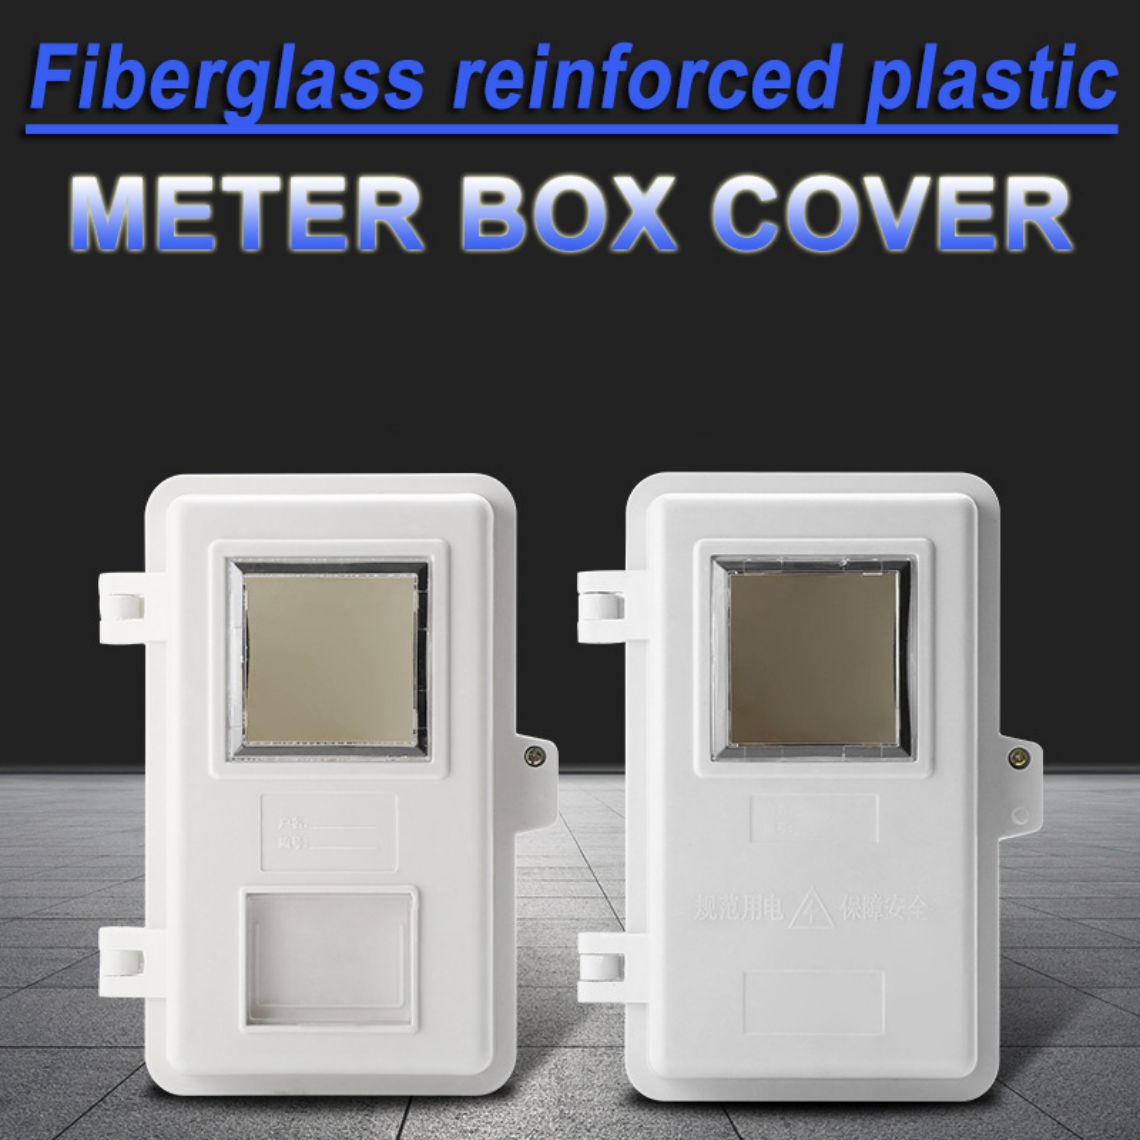 Fiberglass electric meter box